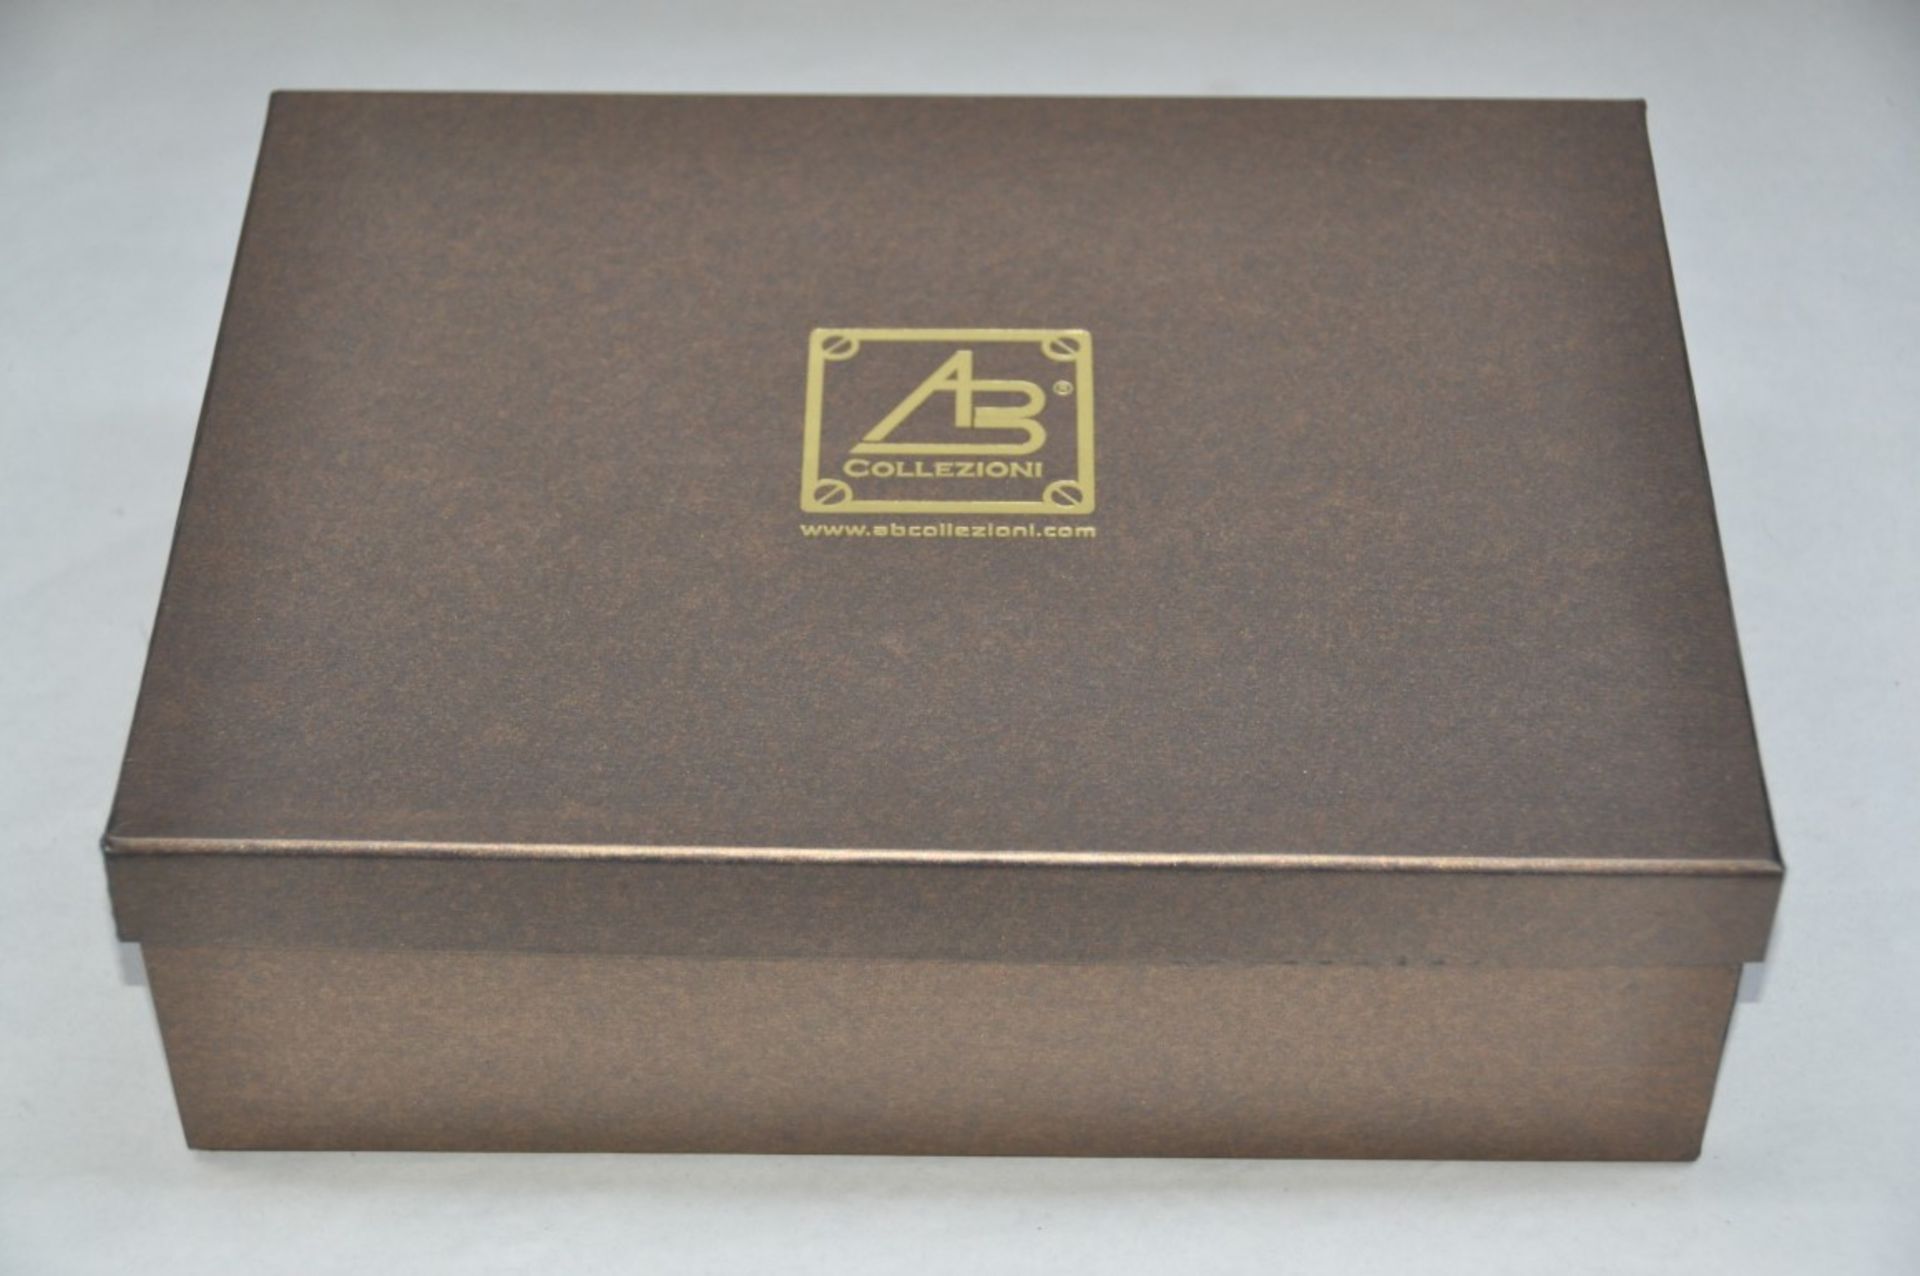 1 x "AB Collezioni" Italian Genuine Leather-Bound Luxury POKER SET (34048) - Ref LT003 - Features - Image 2 of 8